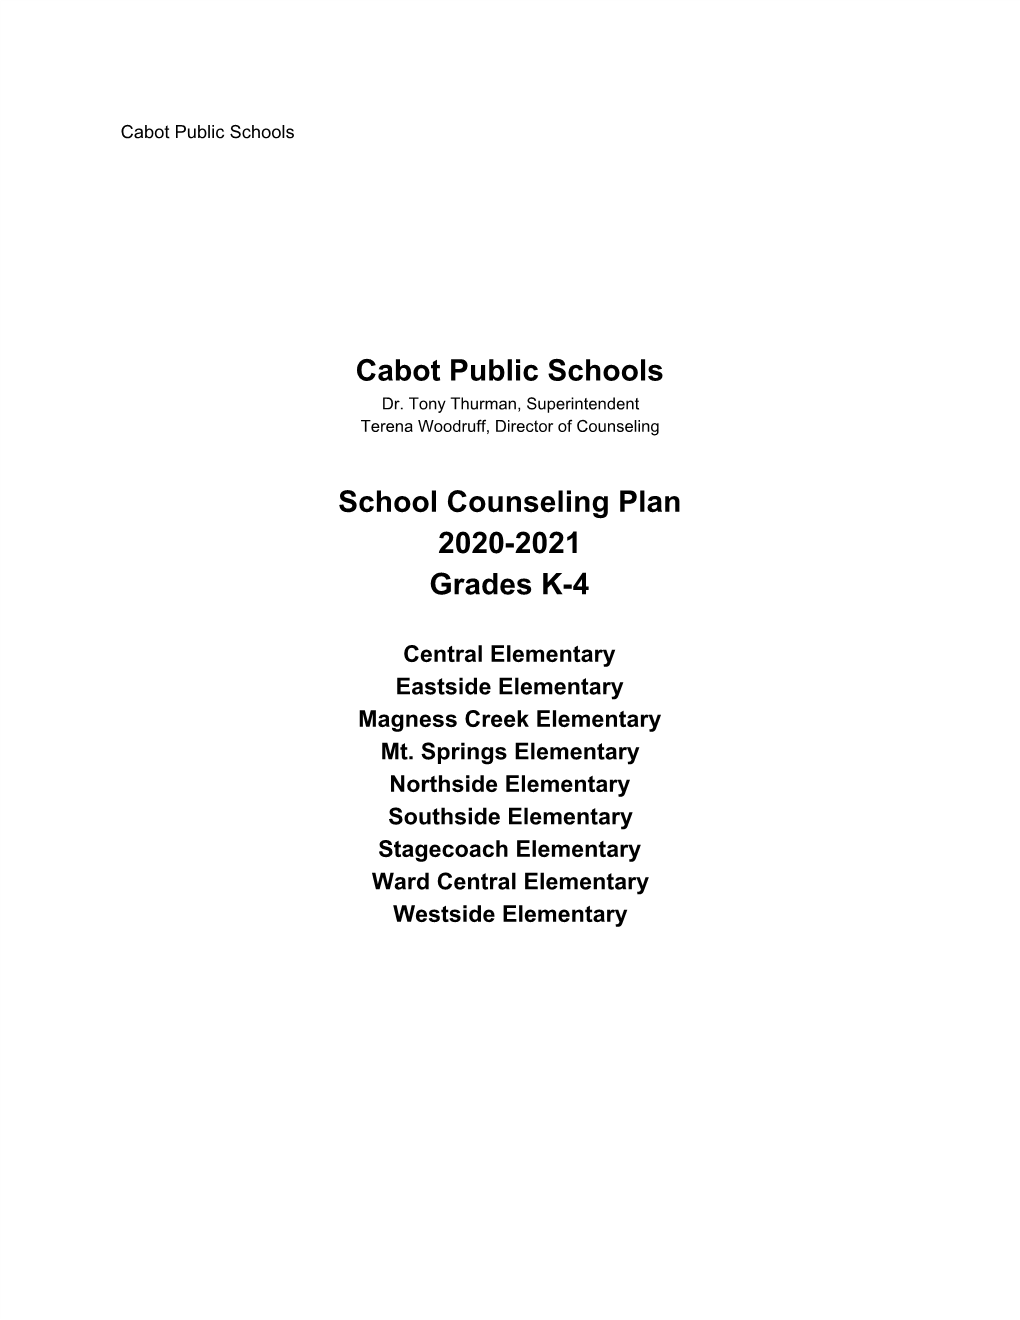 Cabot Public Schools School Counseling Plan 2020-2021